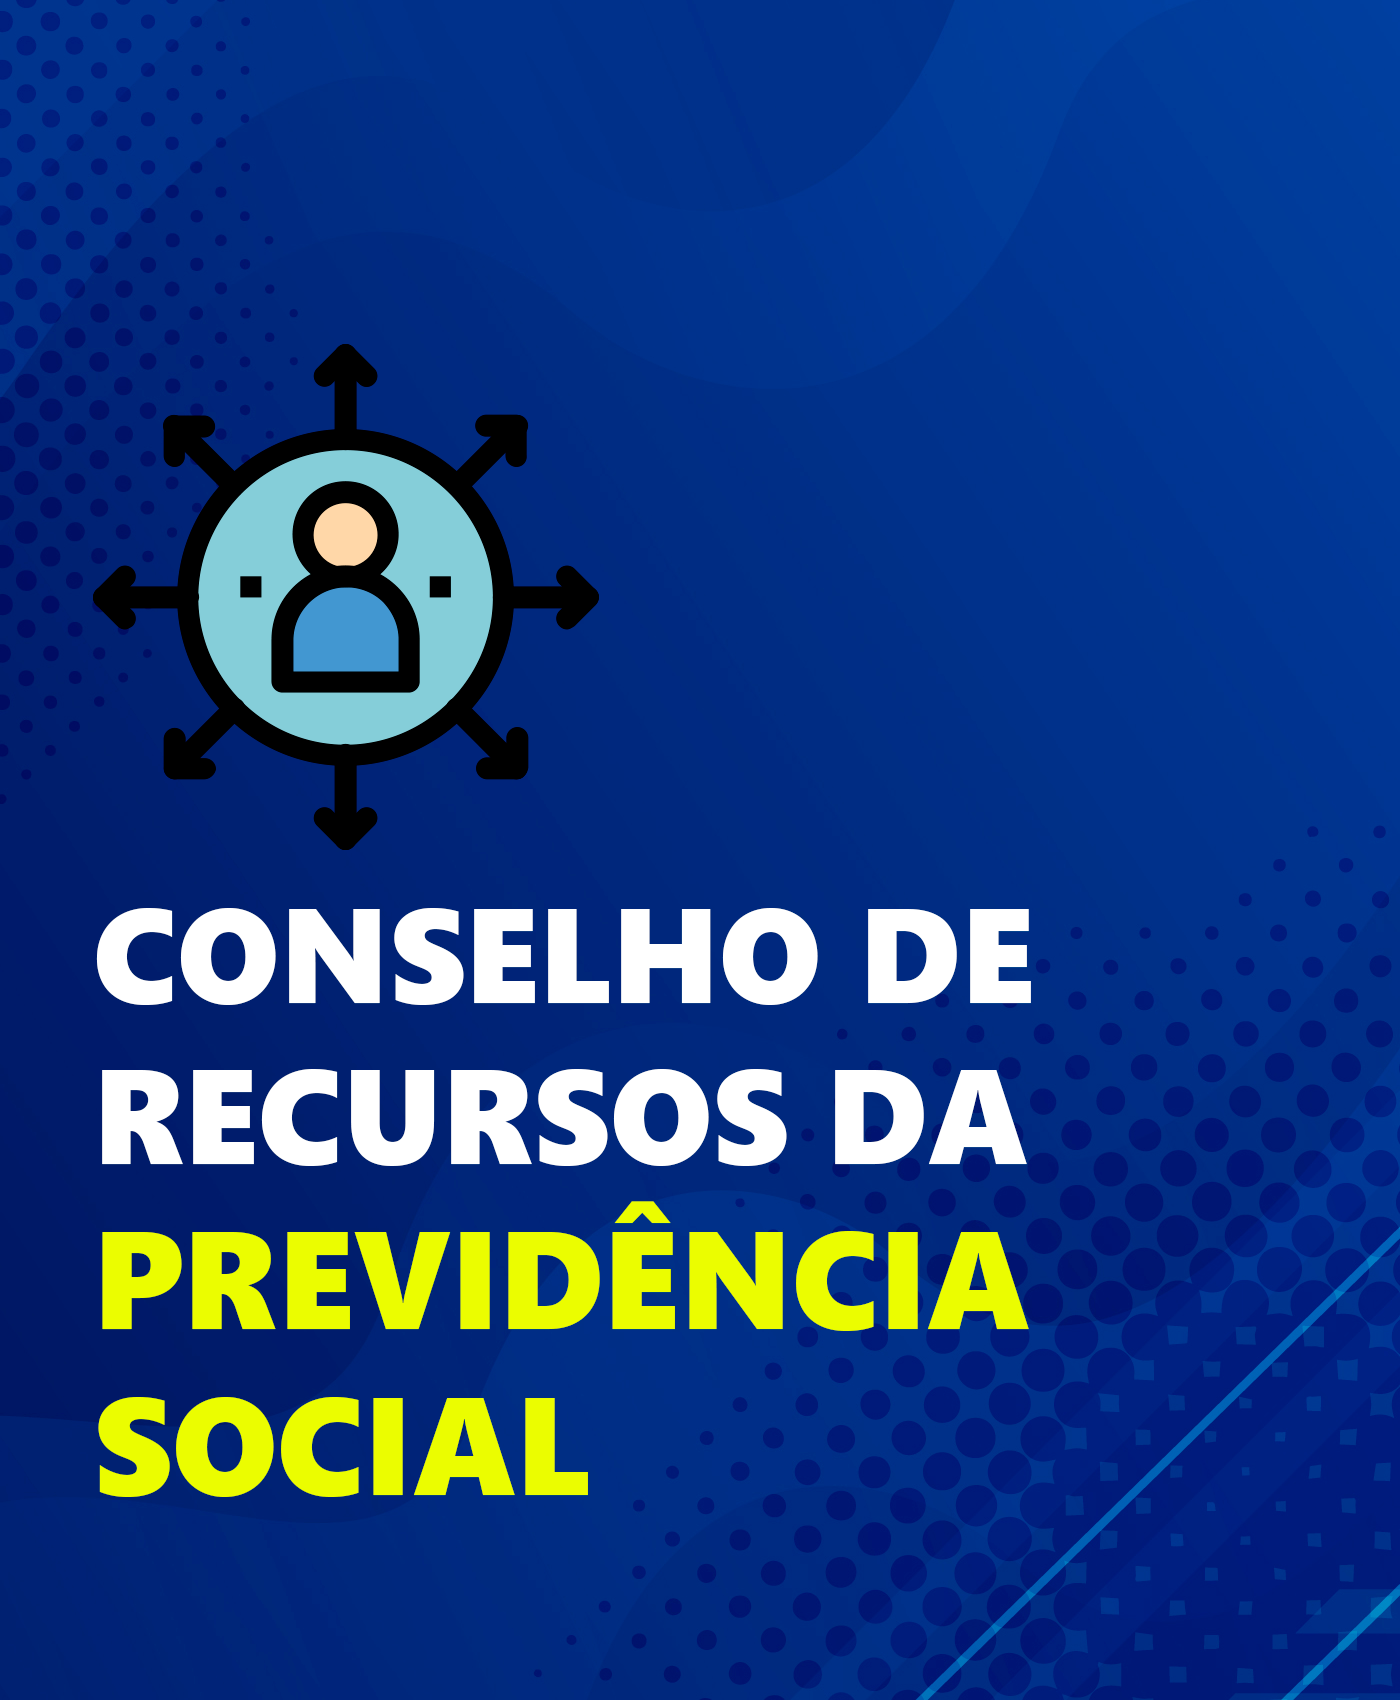 Conselho de Recursos da Previdência Social - Banner